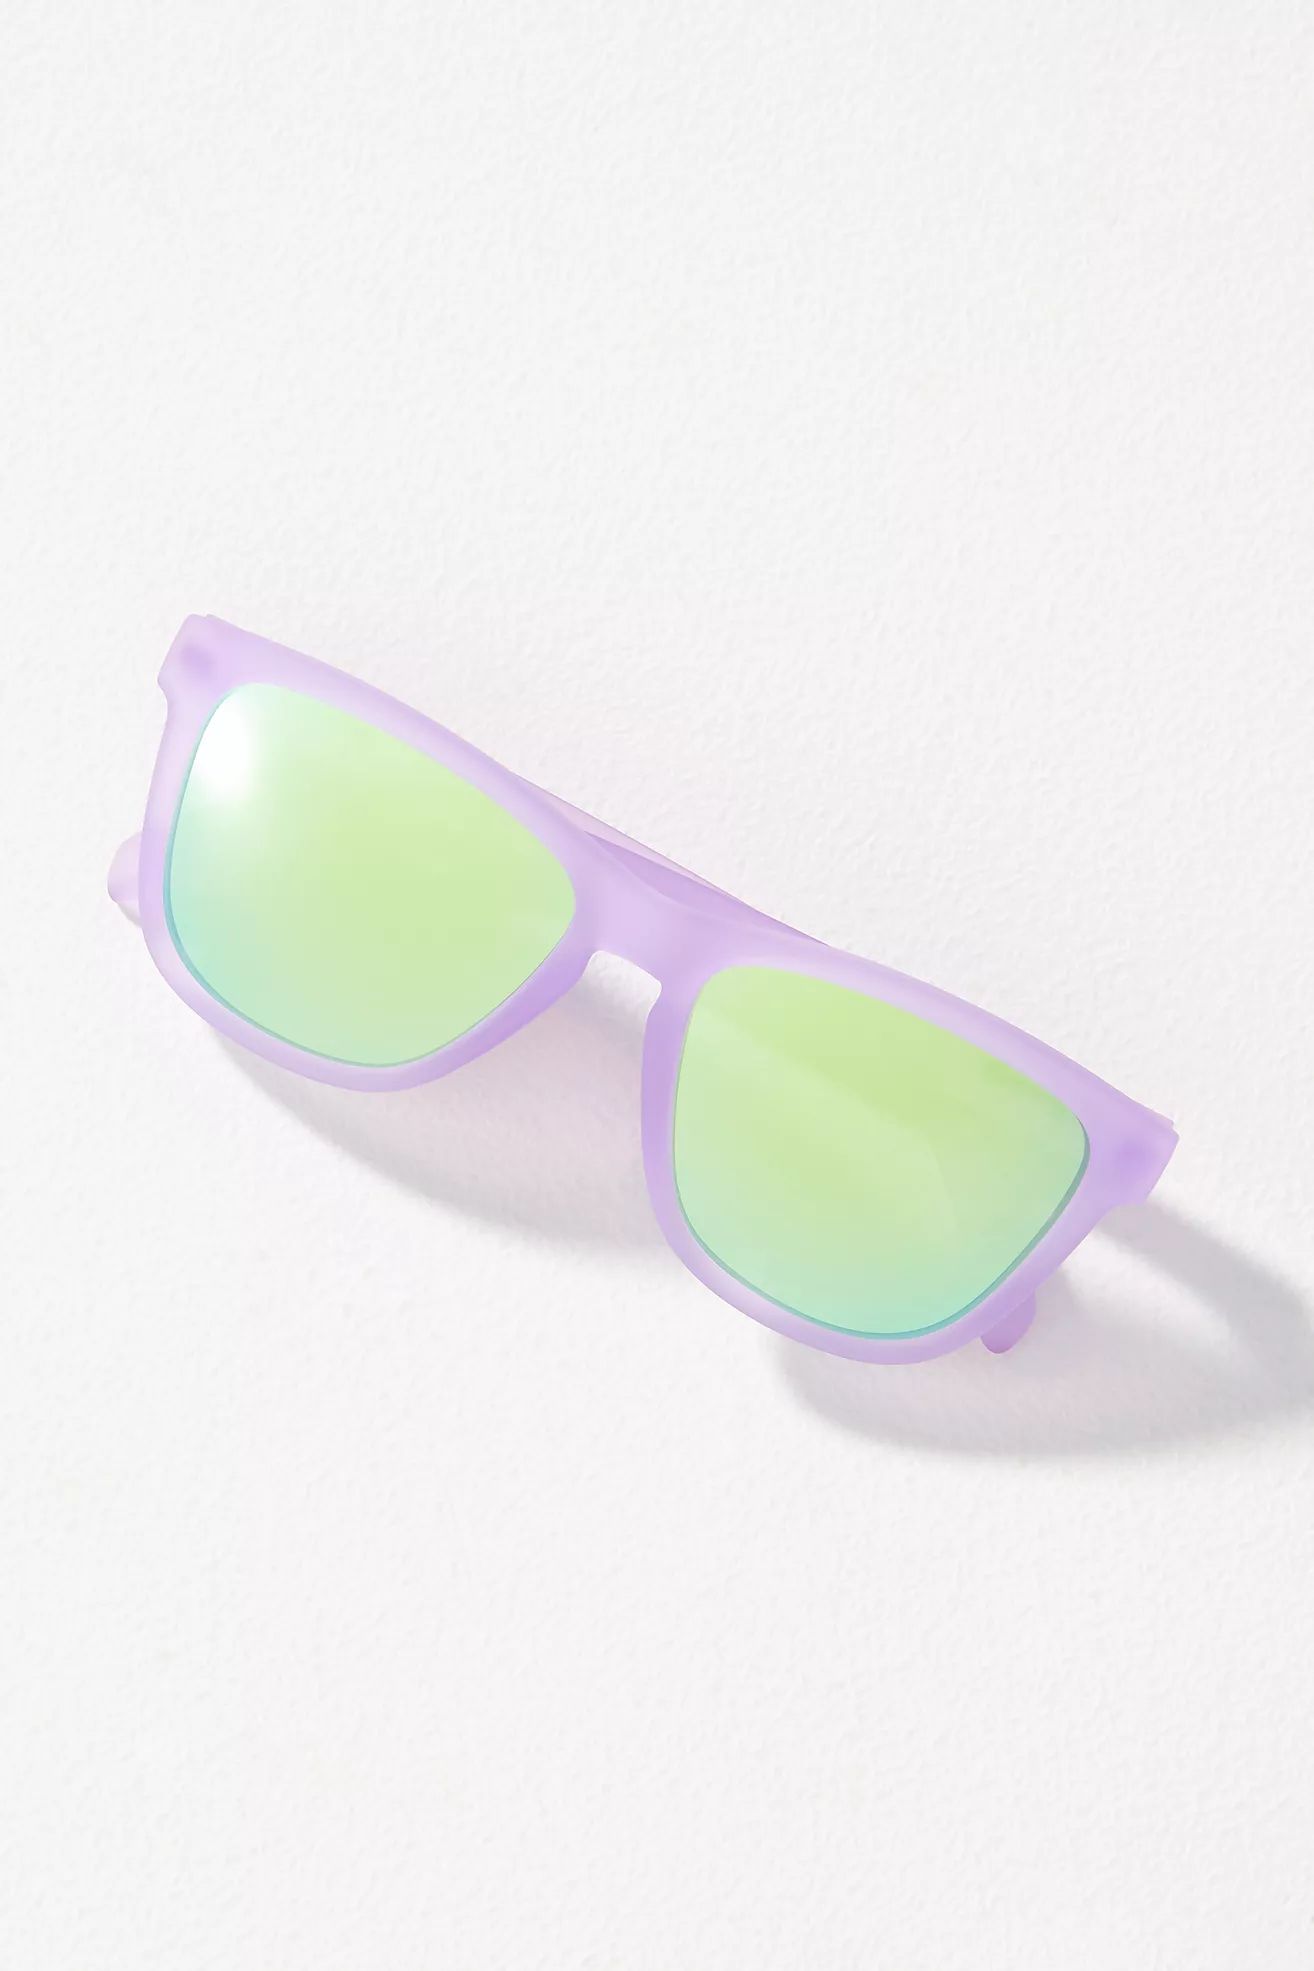 Goodr Lilac It Like That Polarized Sunglasses | Anthropologie (US)